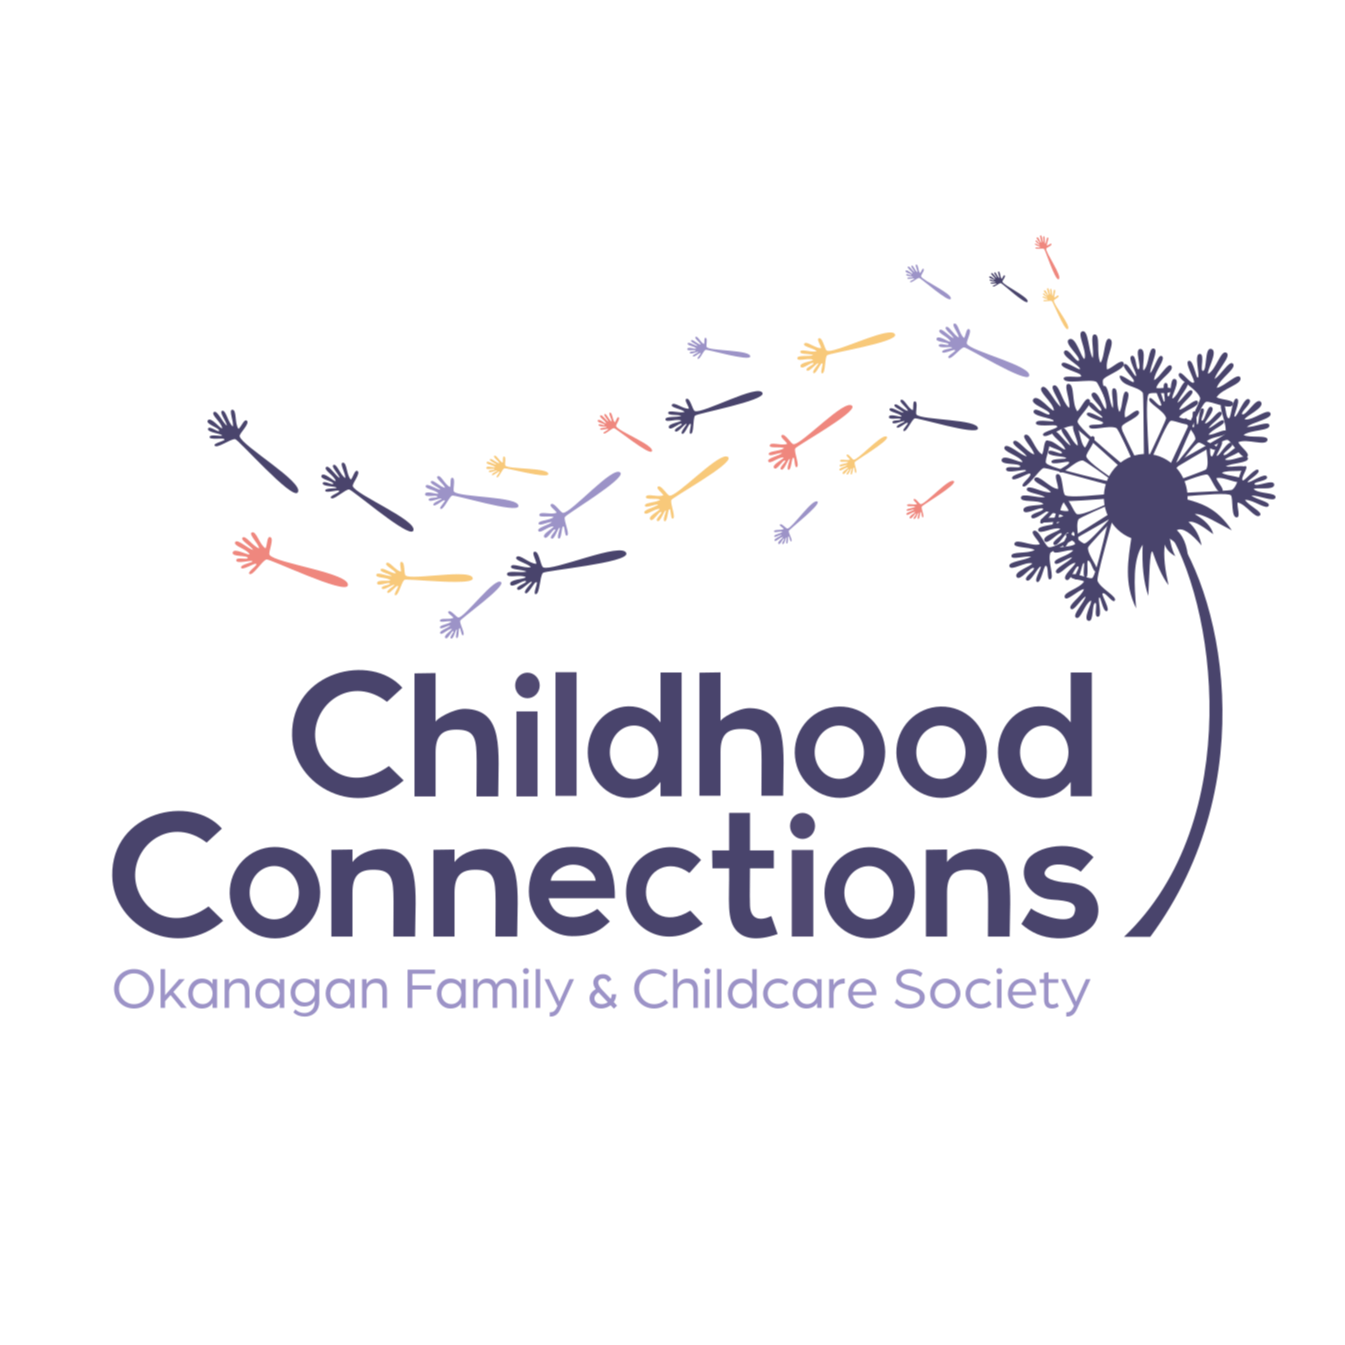 Childhood Connections - Okanagan Family & Childcare Society's Logo